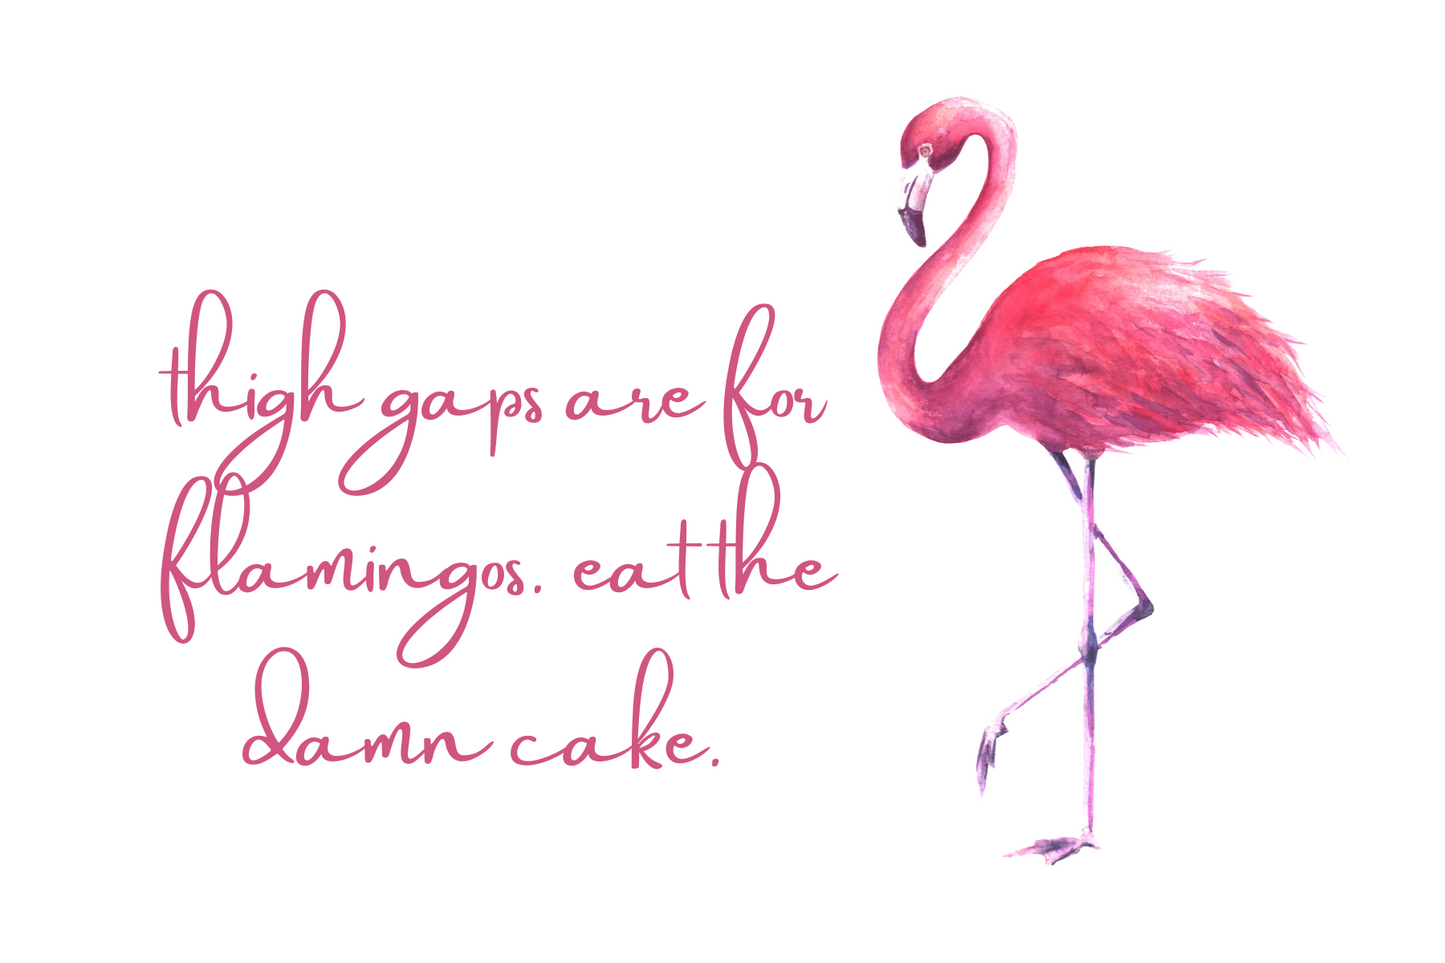 Thigh gaps are for flamingos